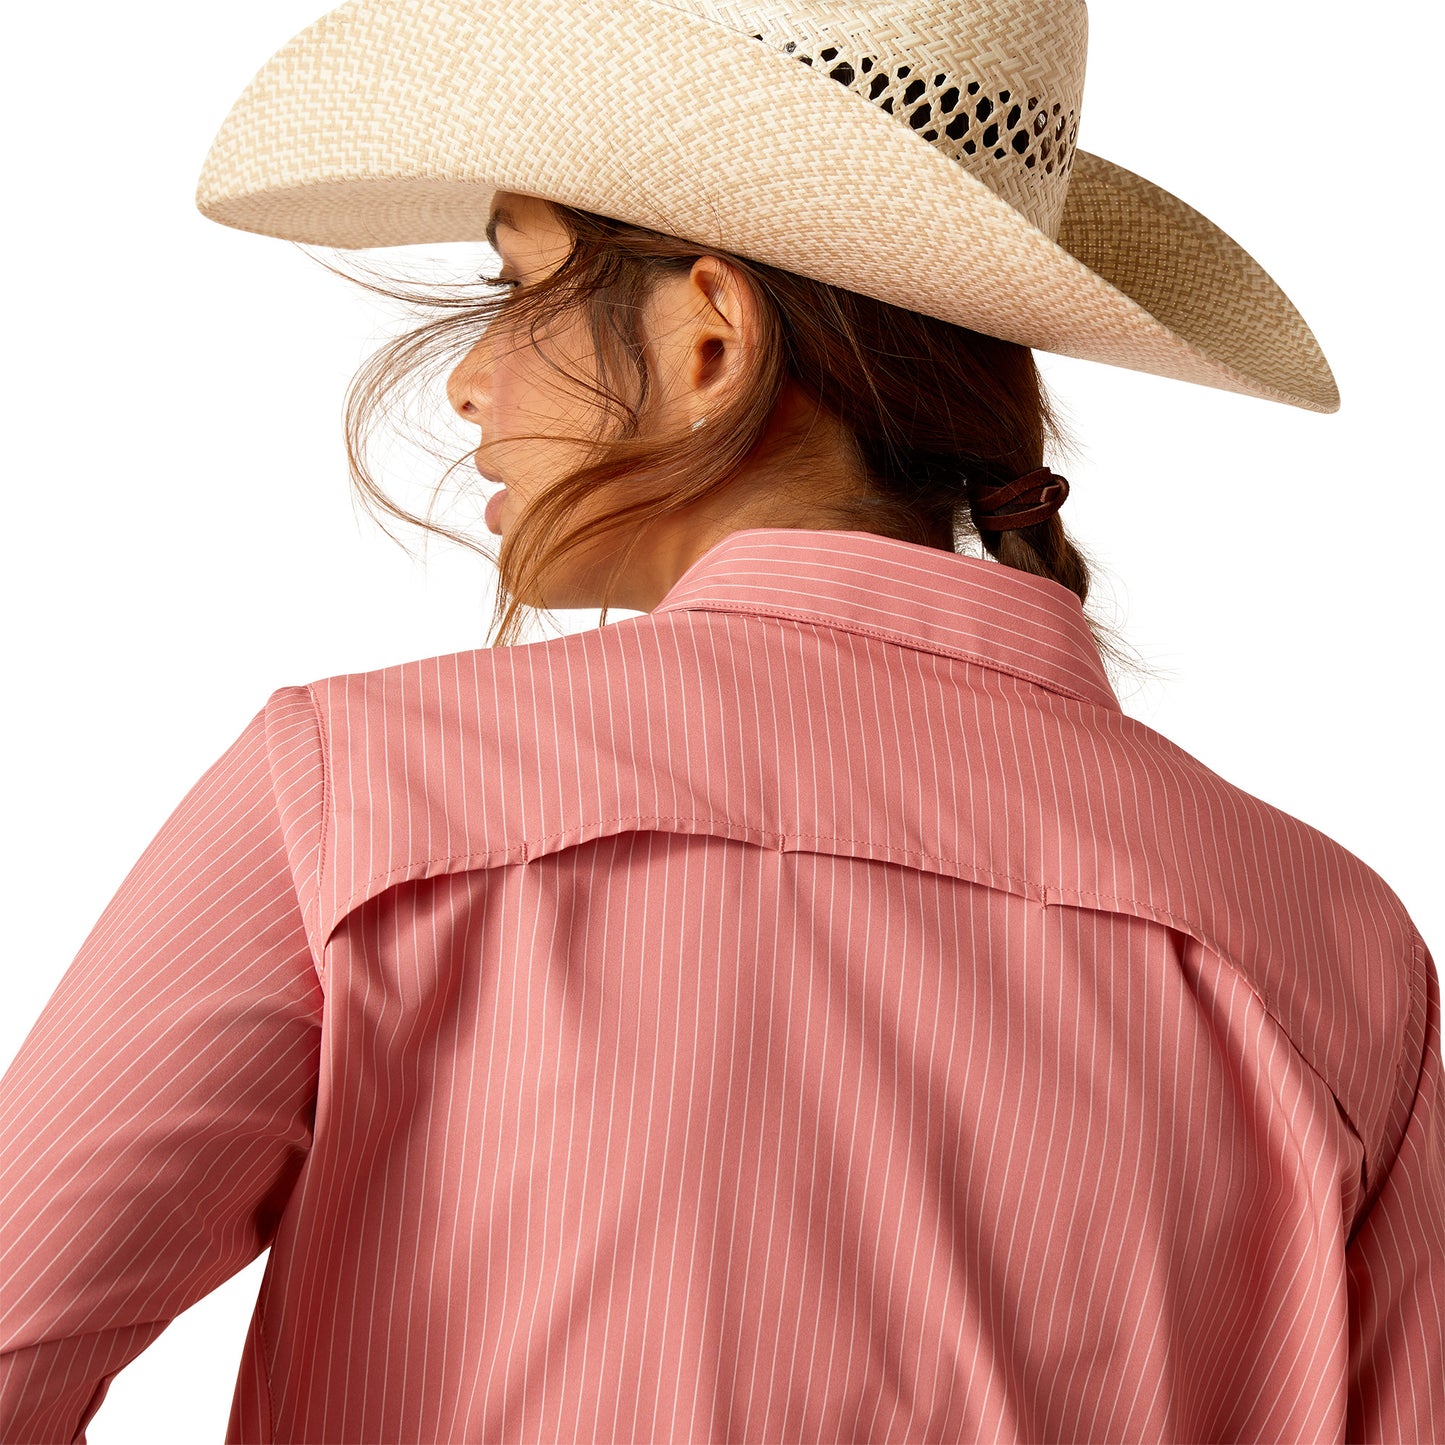 Ariat Ladies VentTEK Stretch Faded Rose Pinstripe Shirt 10048858